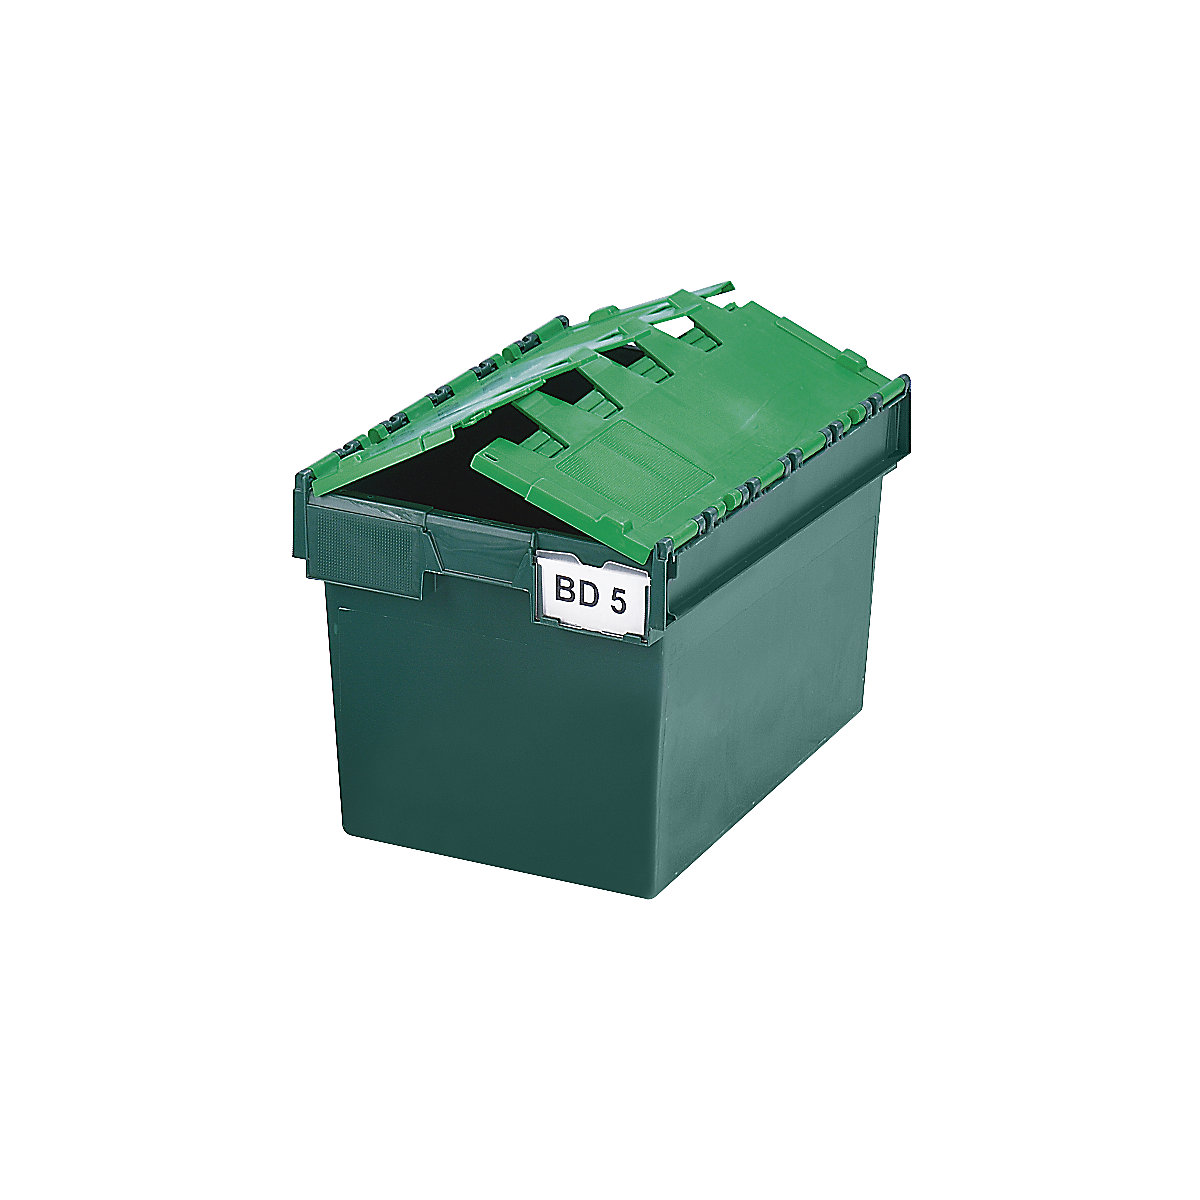 Mehrweg-Stapelbehälter KAIMAN, Inhalt 64 Liter, LxBxH 600 x 400 x 365 mm, grün, ab 10 Stück